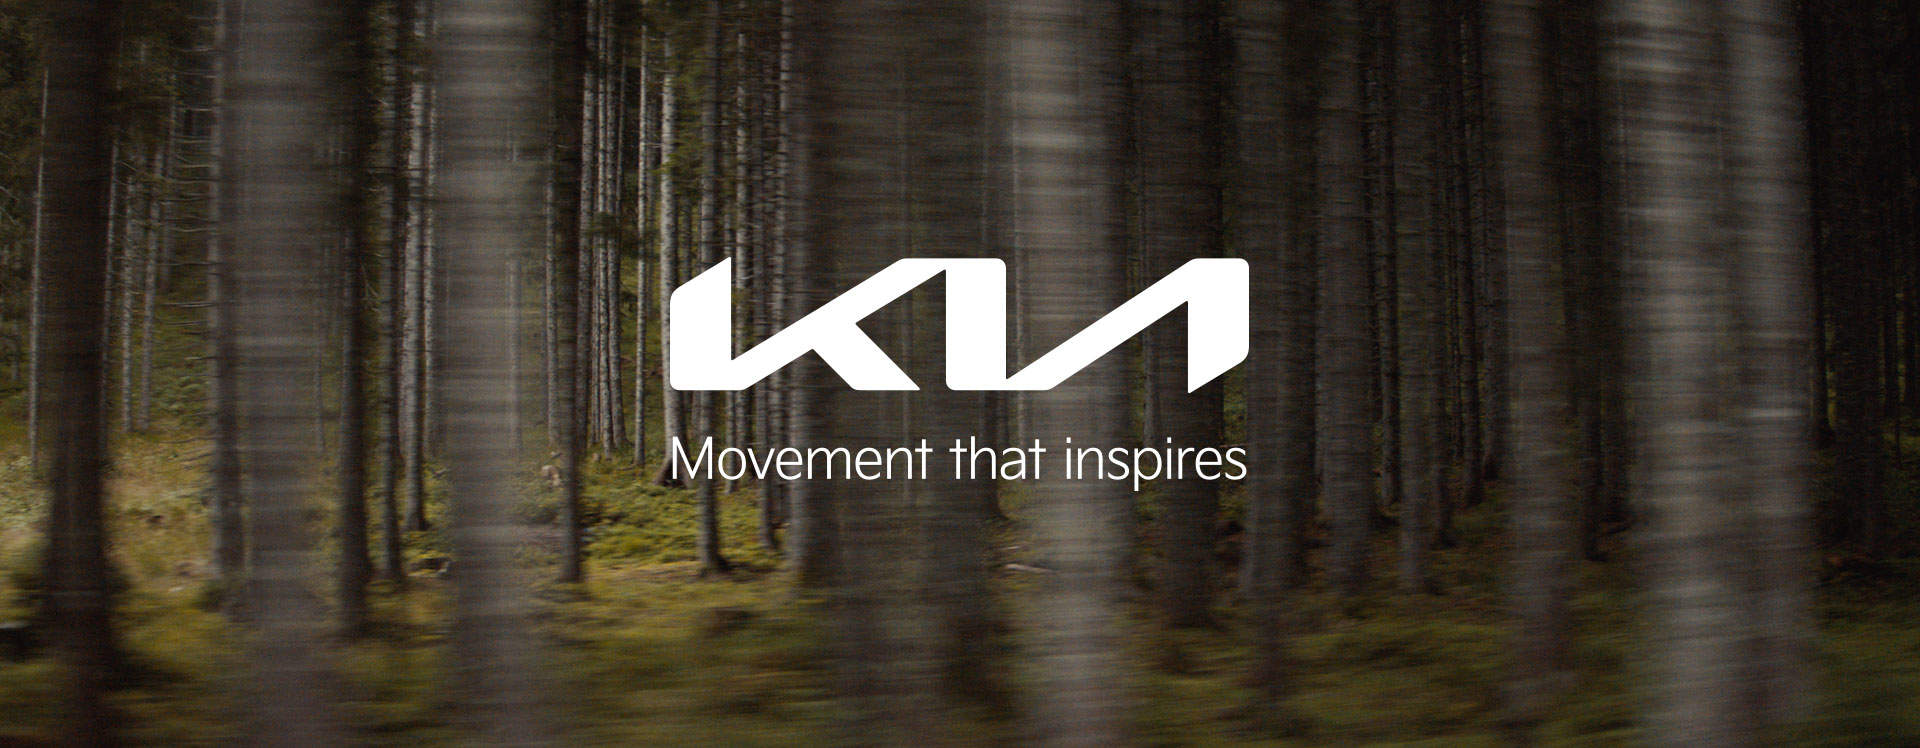 kia-brand-header-image